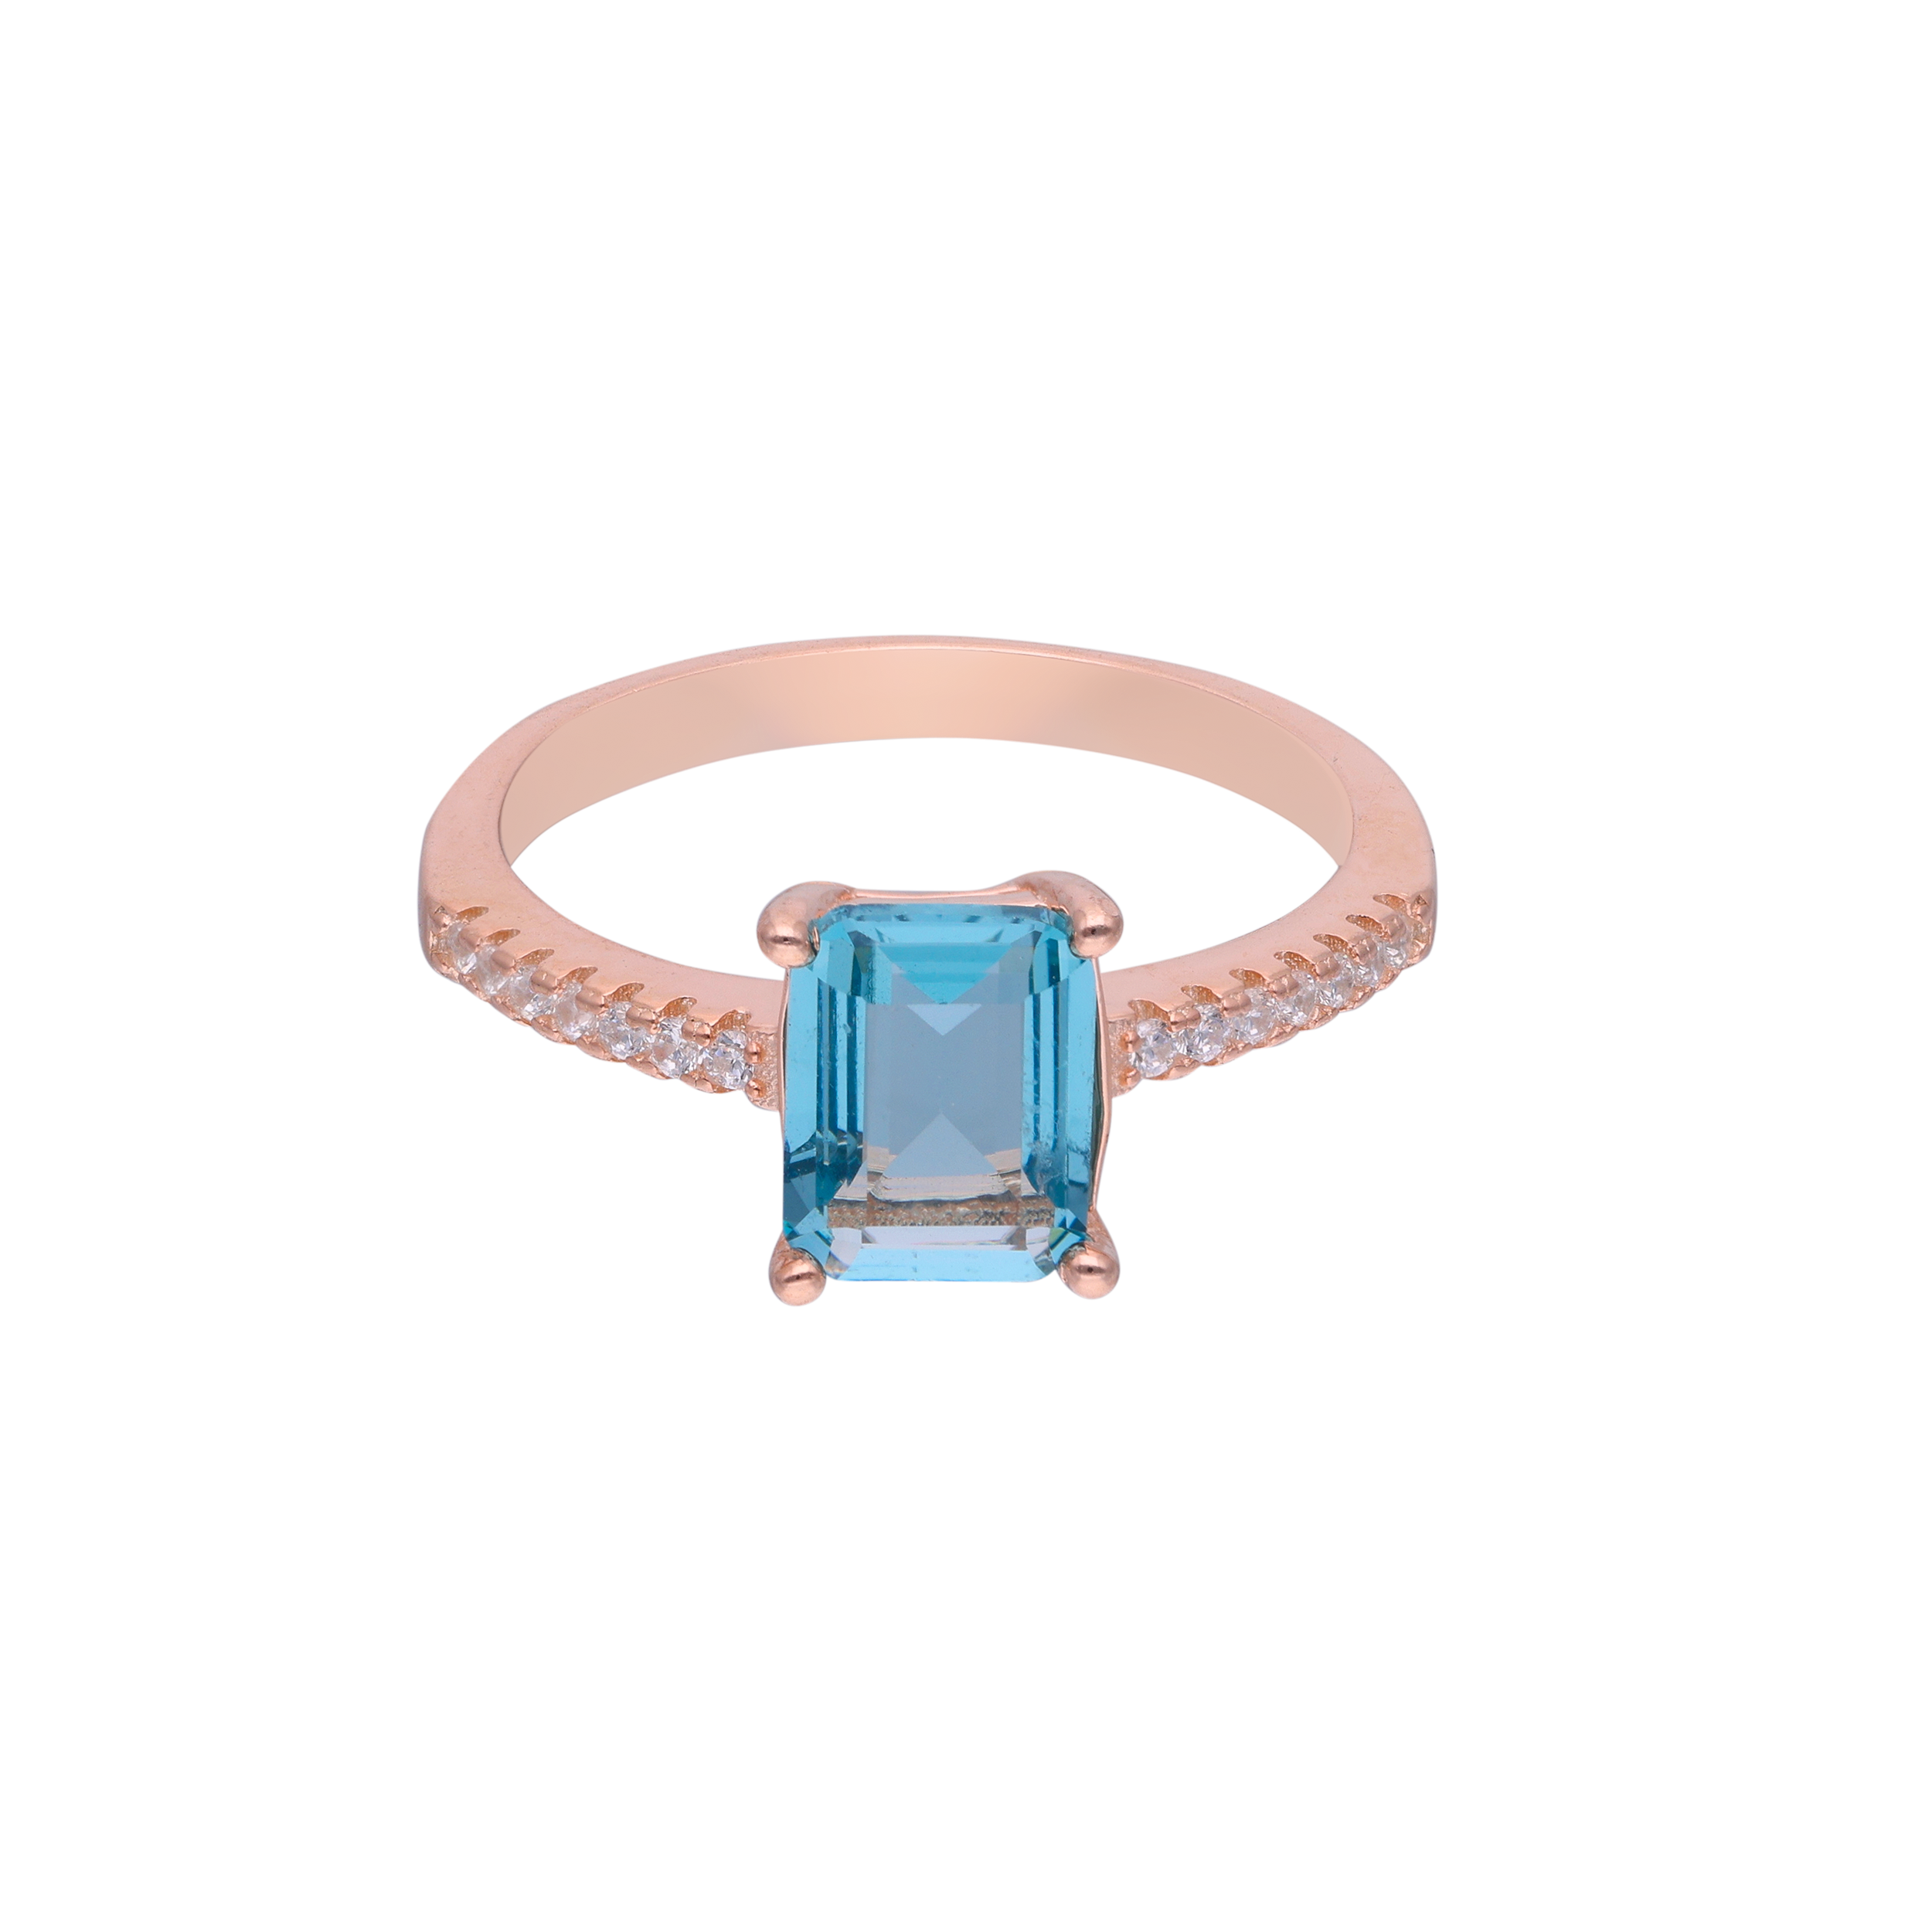 Sapphire Radiance Silver Ring | SKU: 0019211688